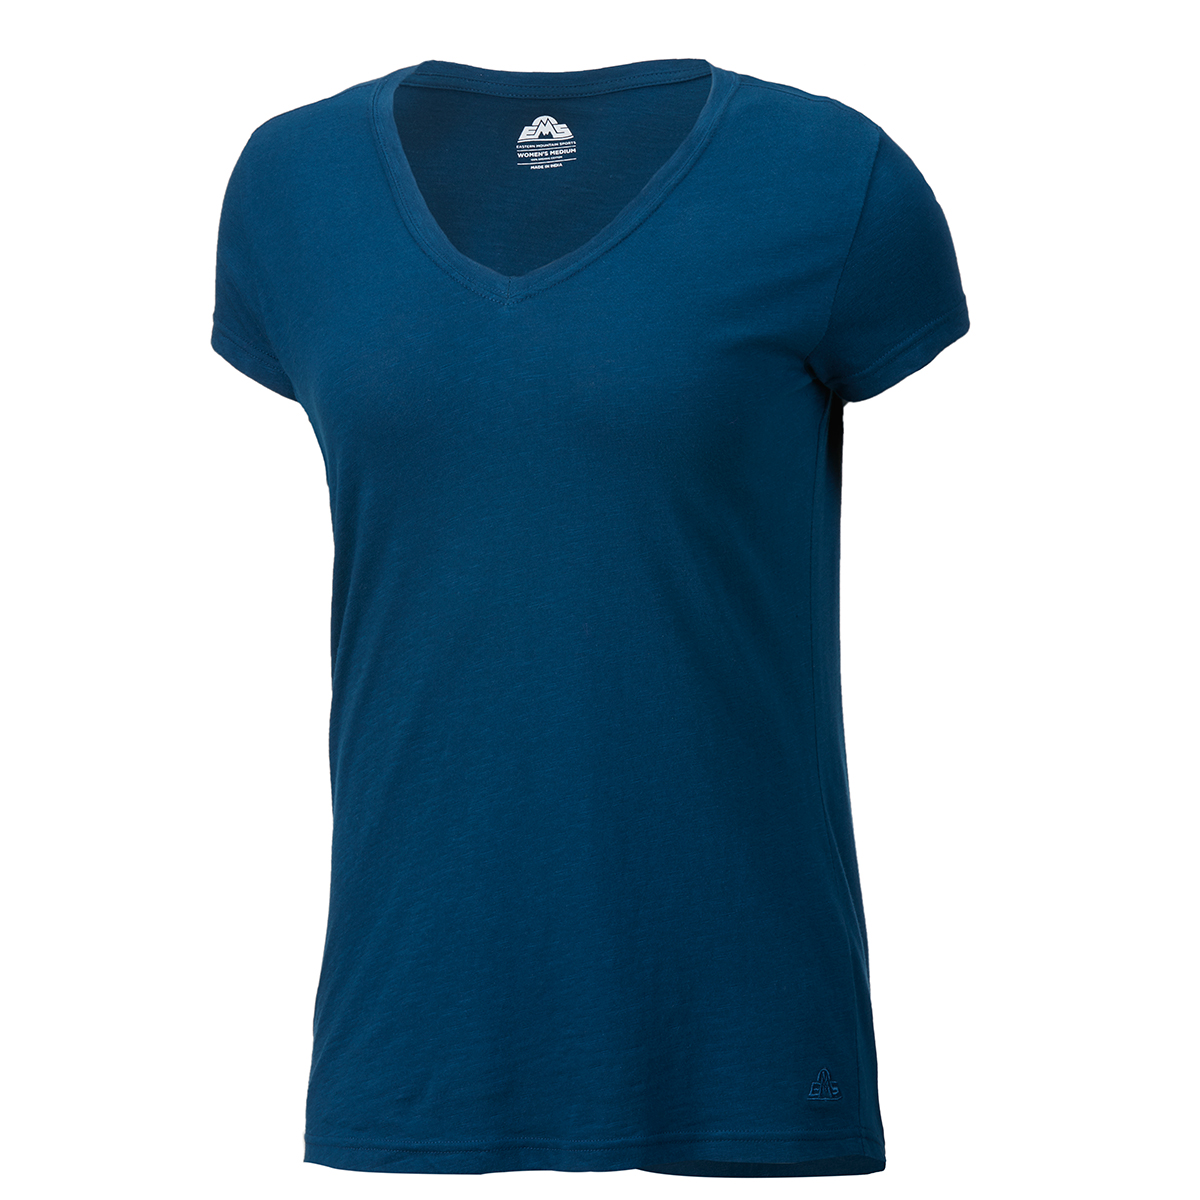 Ems Women's Organic Slub V-Neck Short-Sleeve Tee - Blue, S